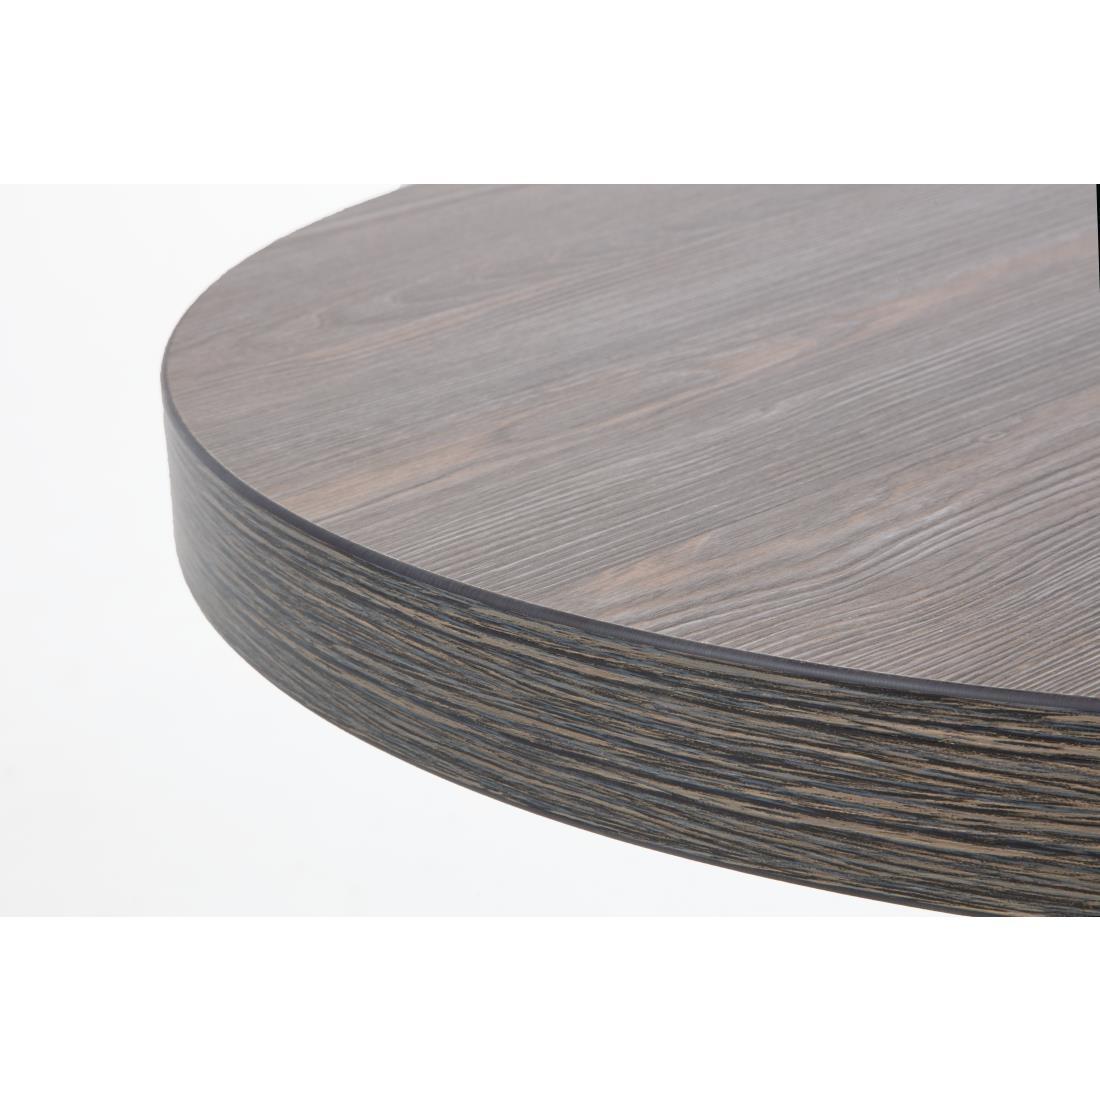 Bolero Round Table Top Vintage Wood 600mm - GR326  - 6